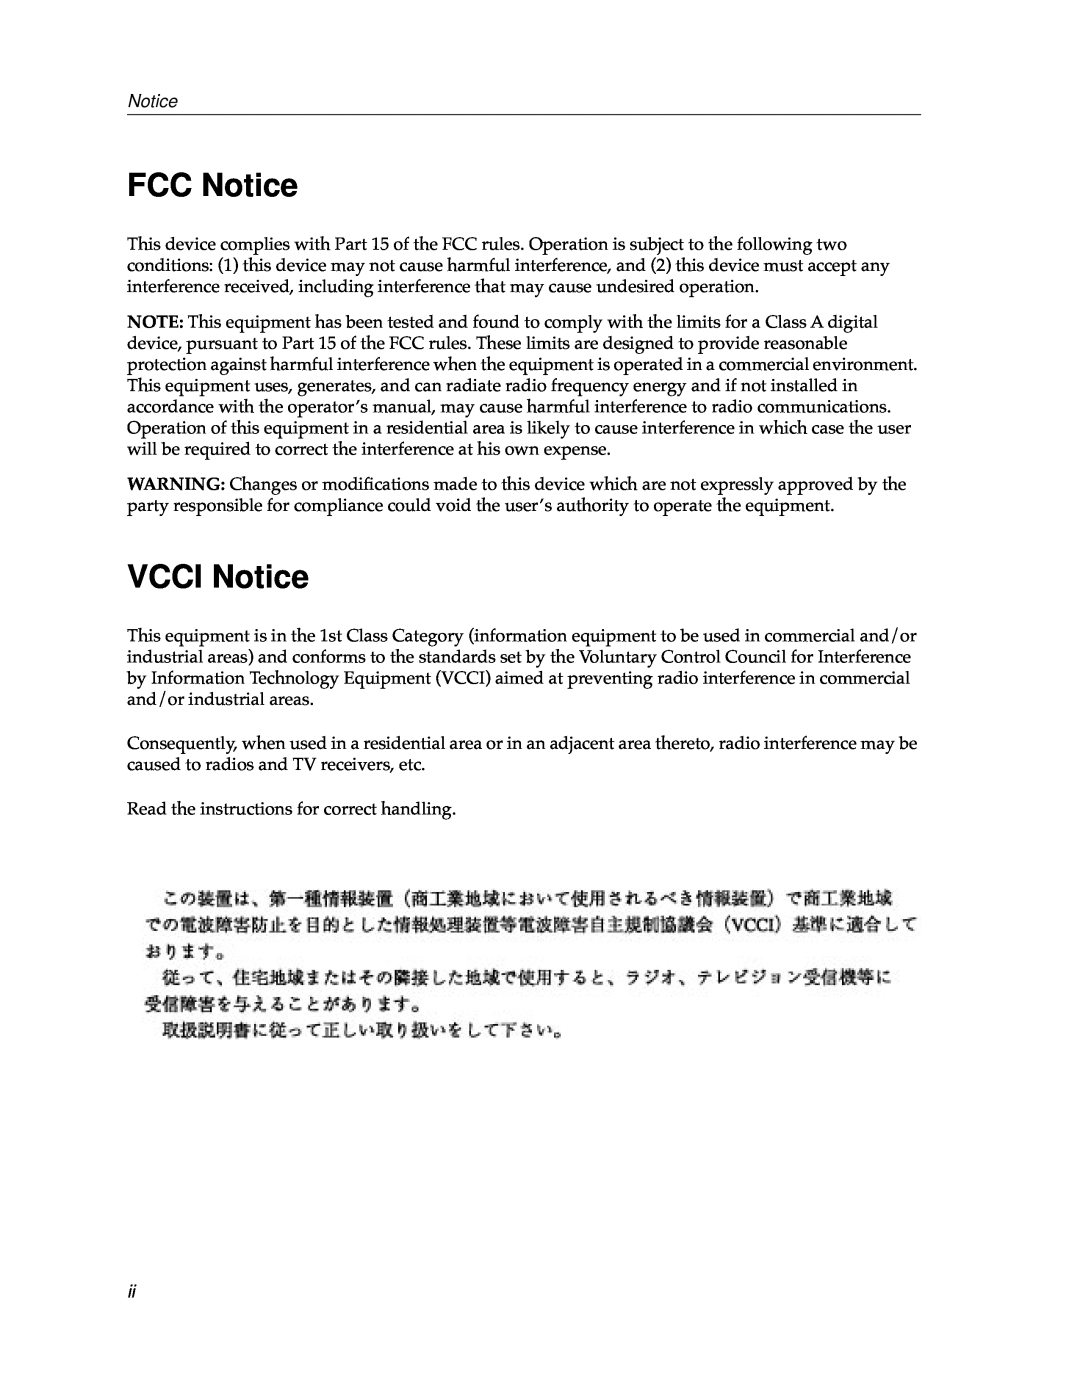 Cabletron Systems 9W111-08 manual FCC Notice, VCCI Notice 